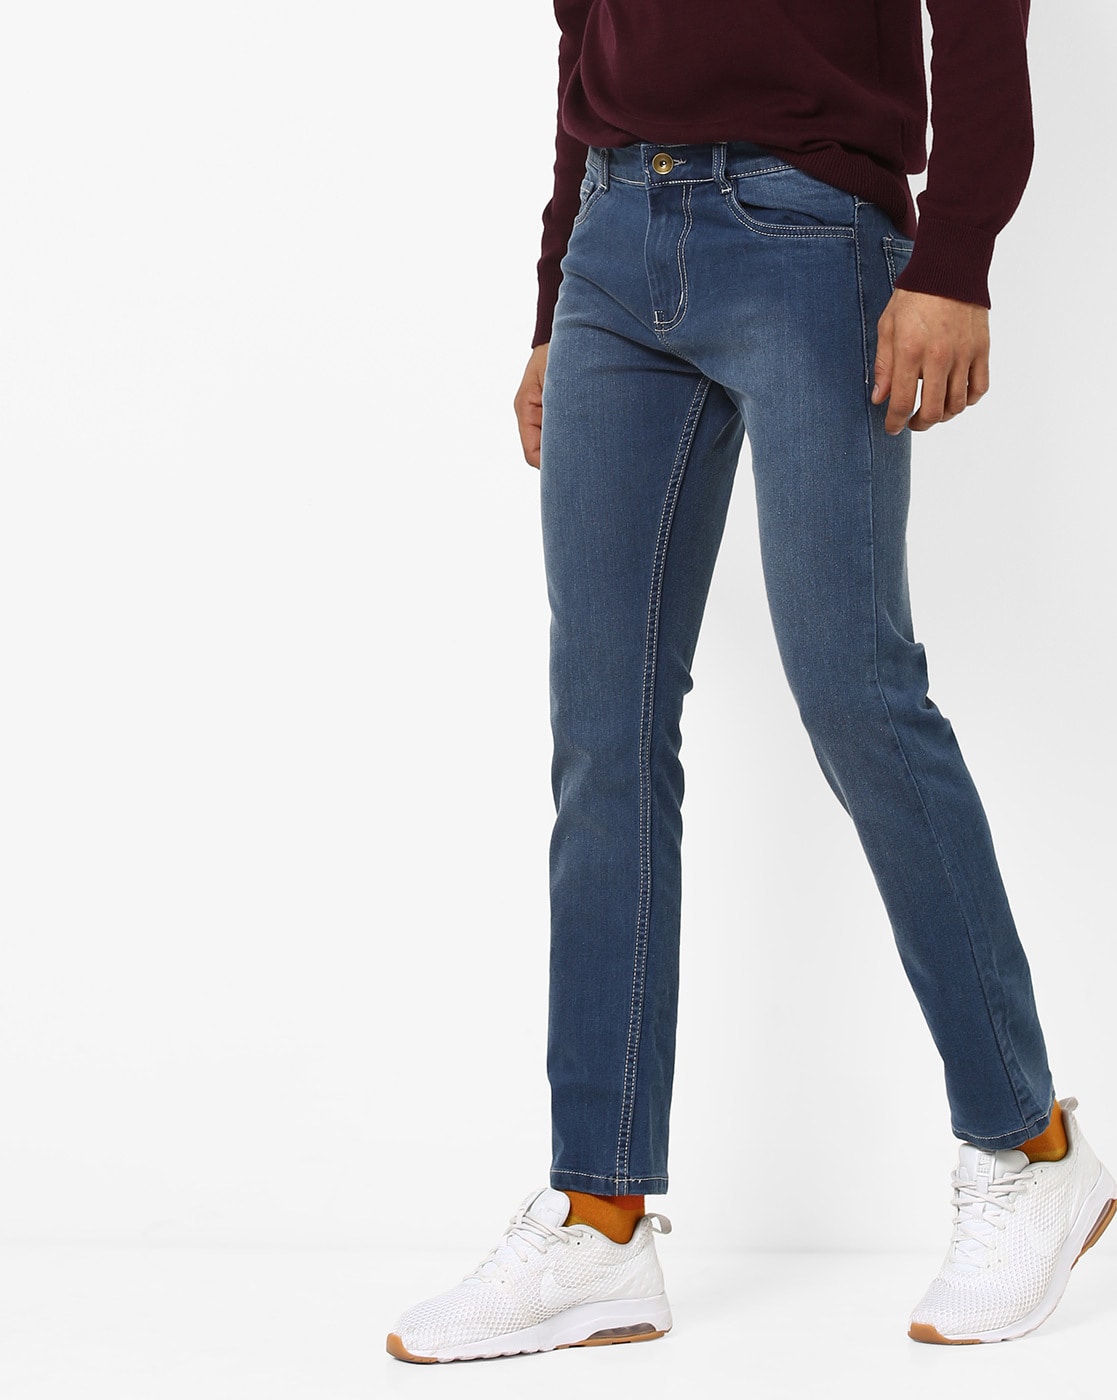 deezeno jeans